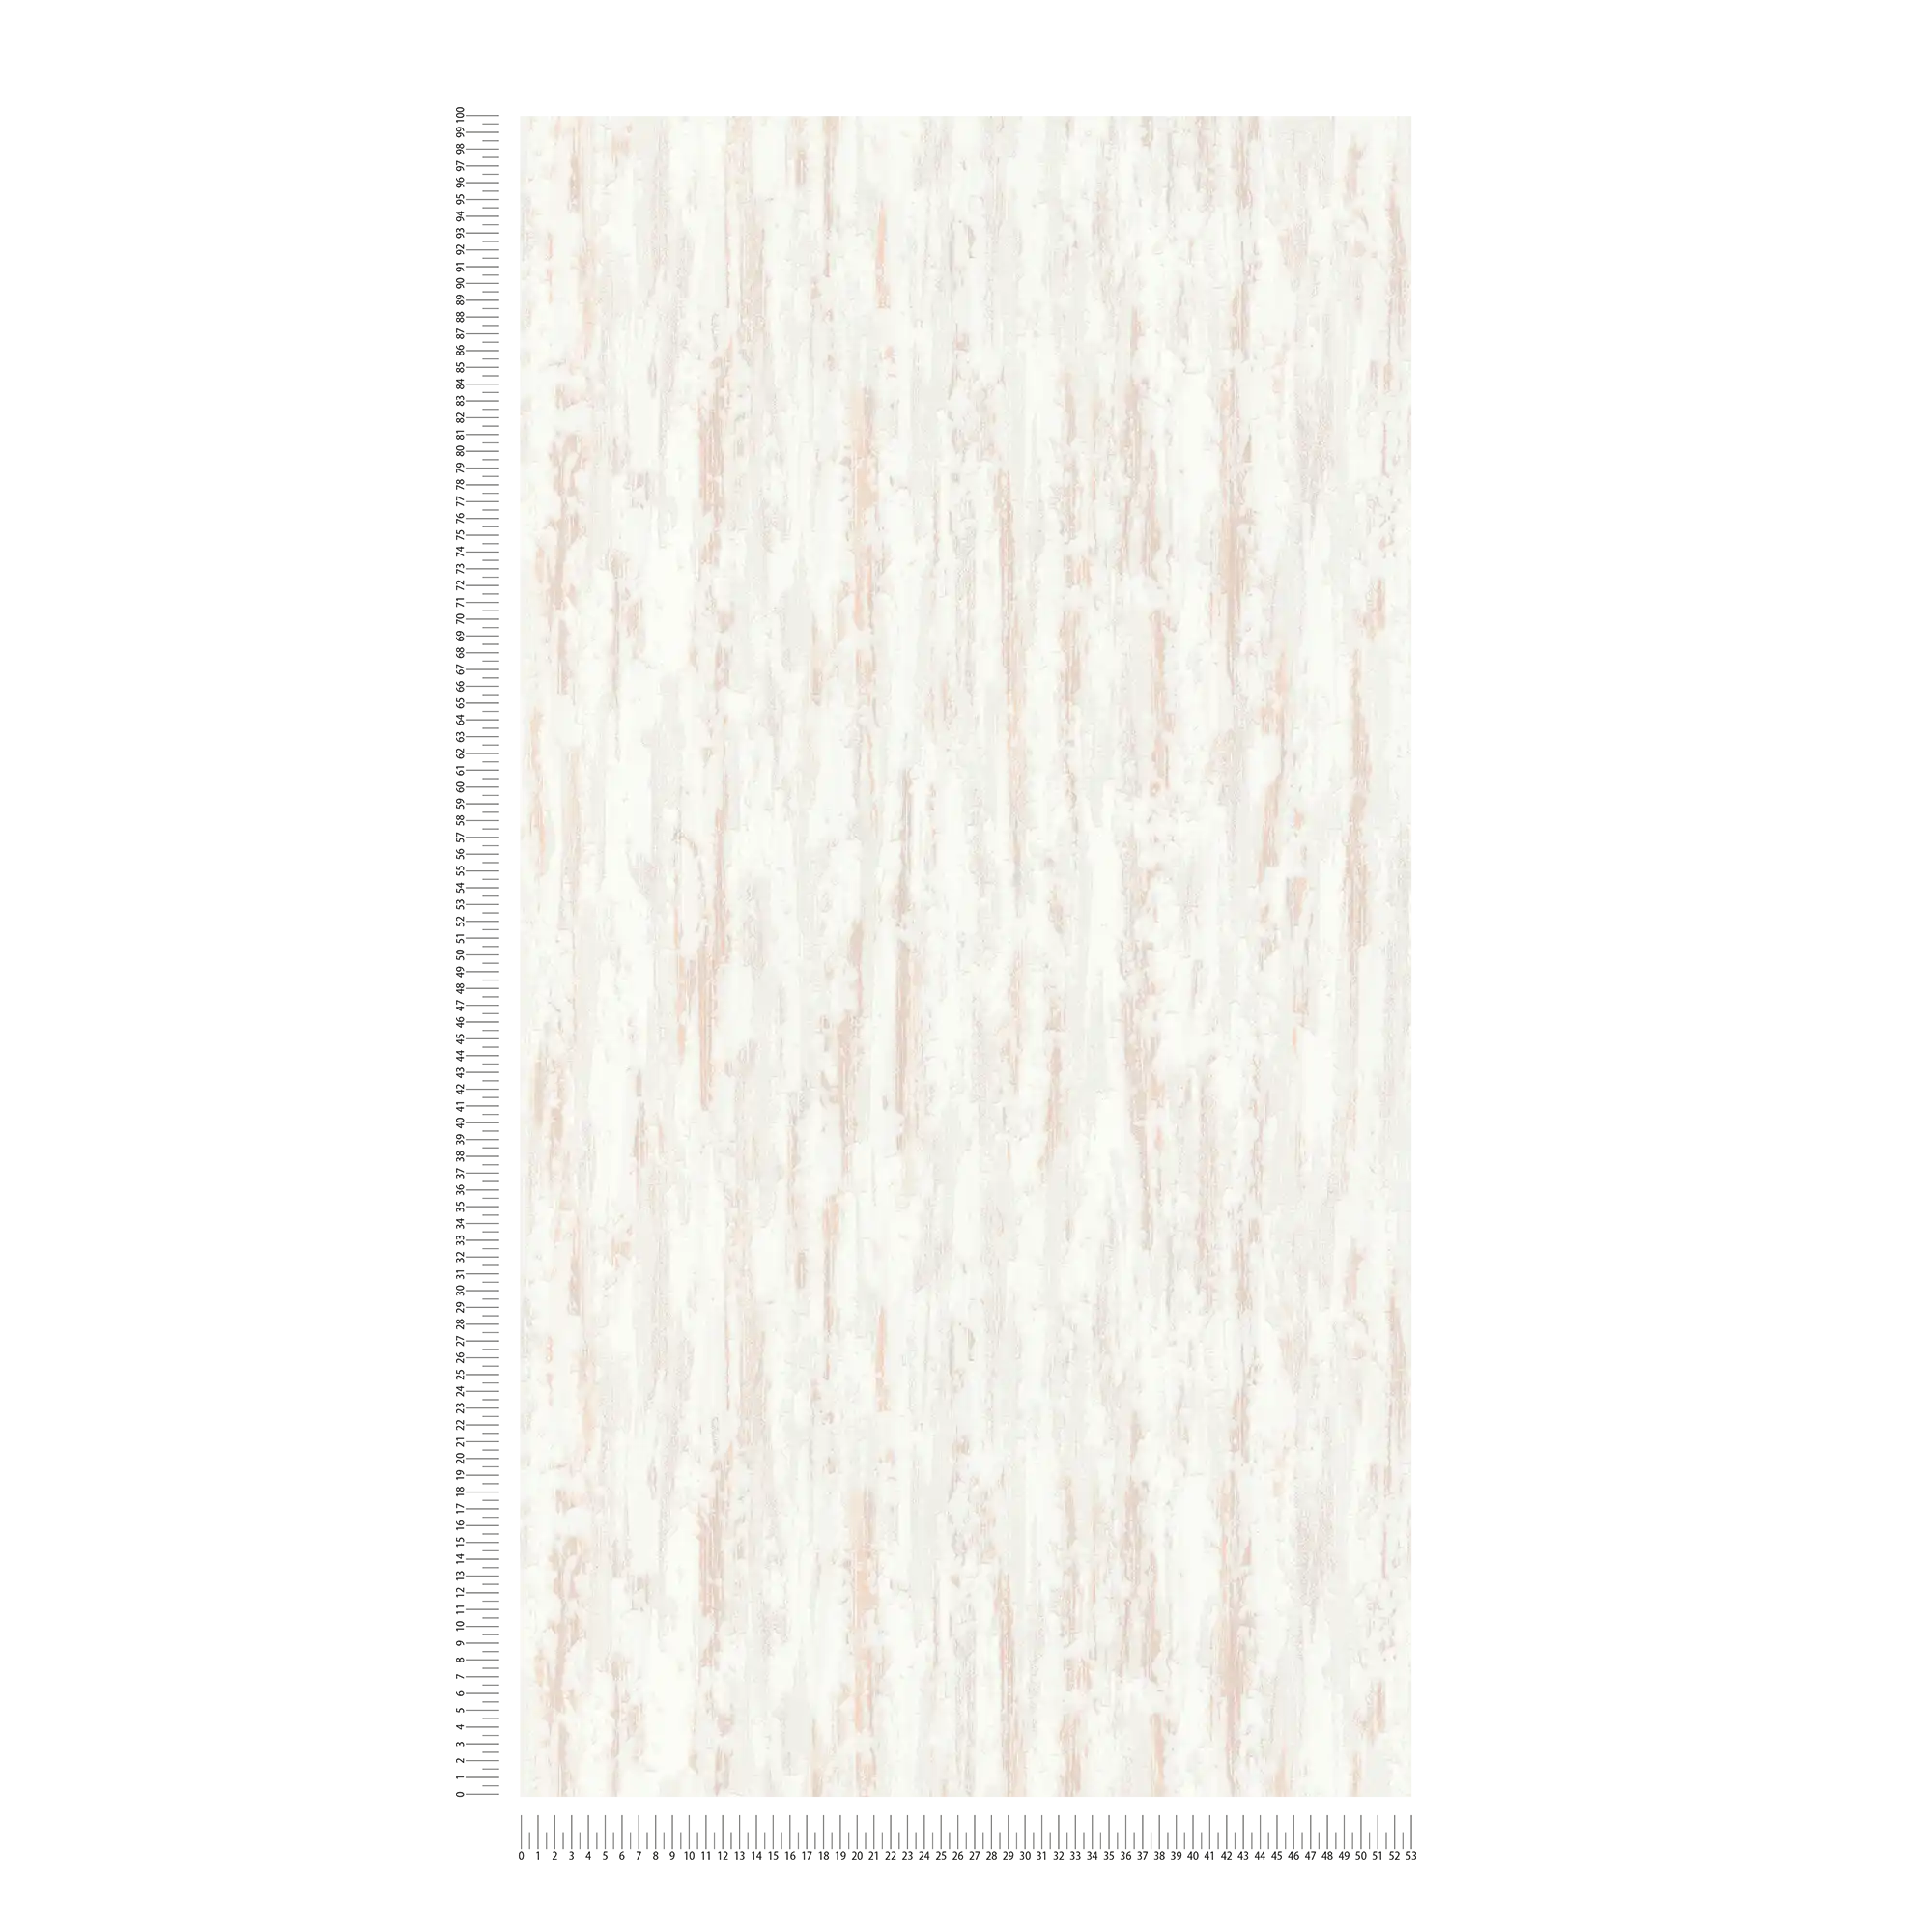             Cream mottled wallpaper with plaster texture - beige, brown, white
        